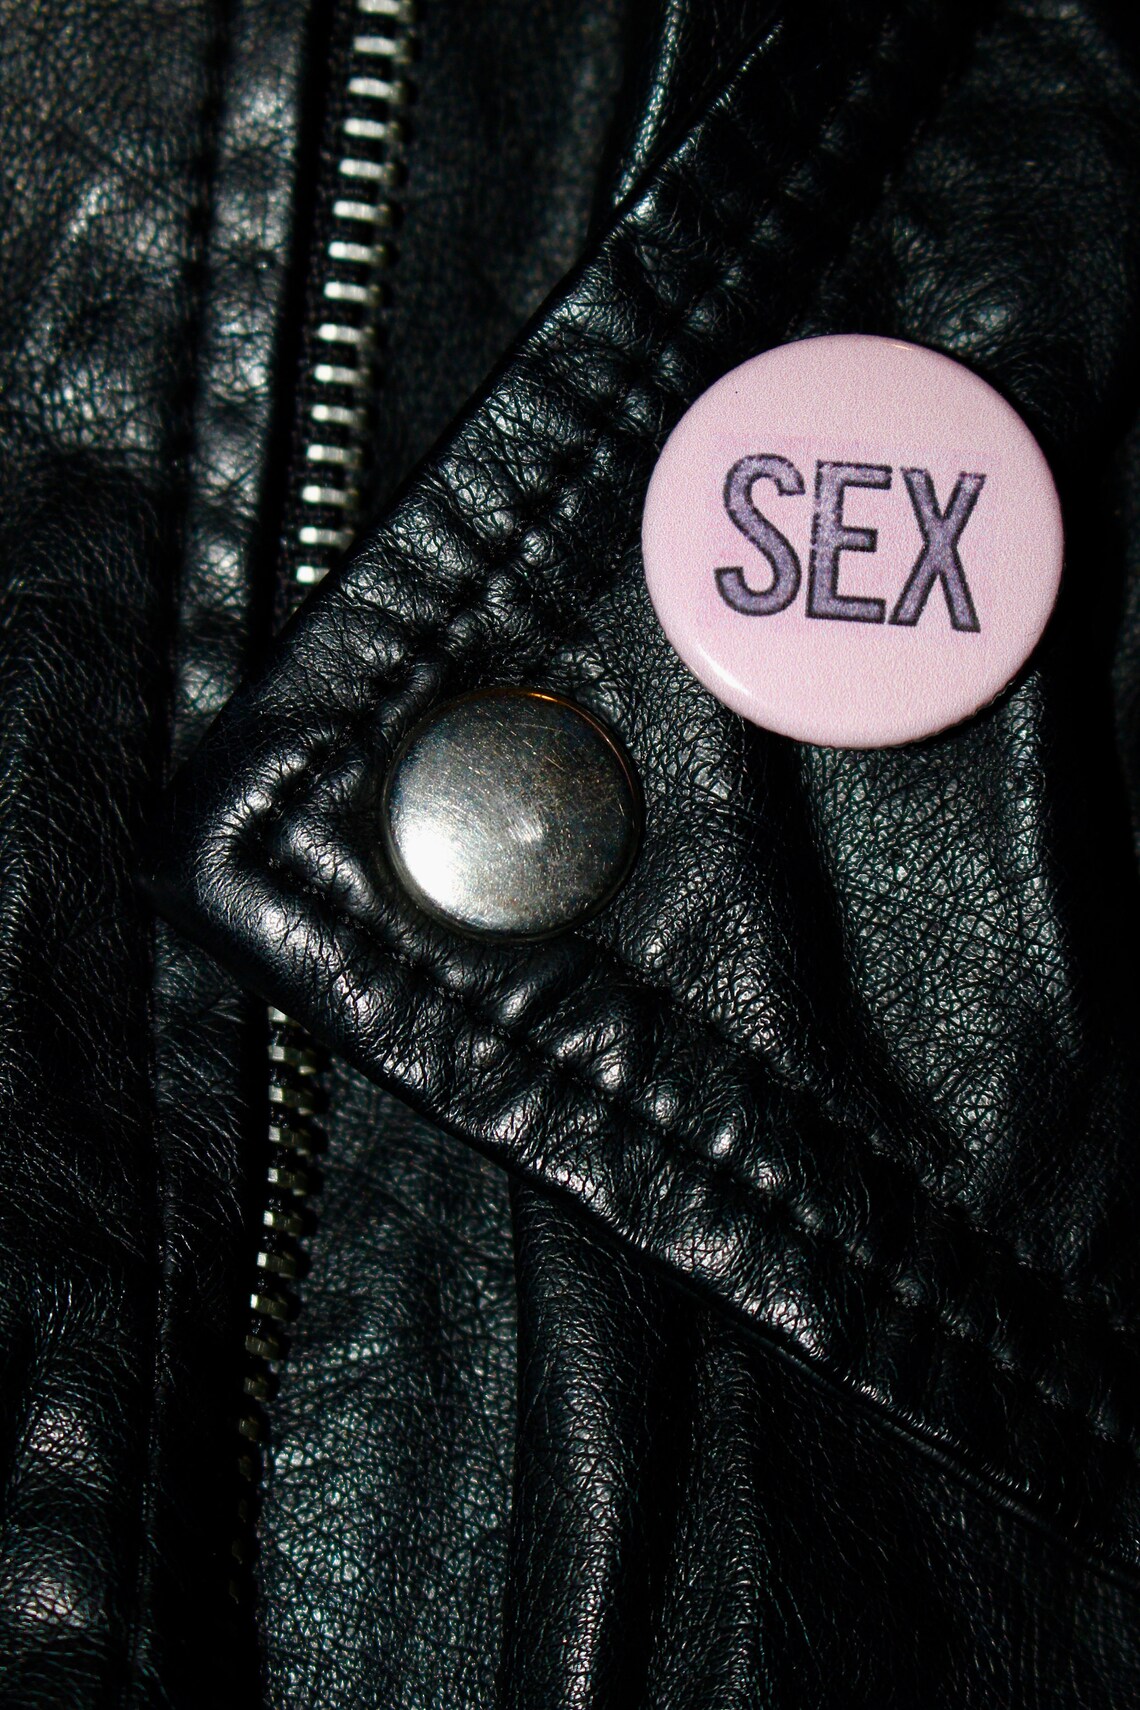 Sex Handmade 25mm Button Badge 430 Kings Road Etsy